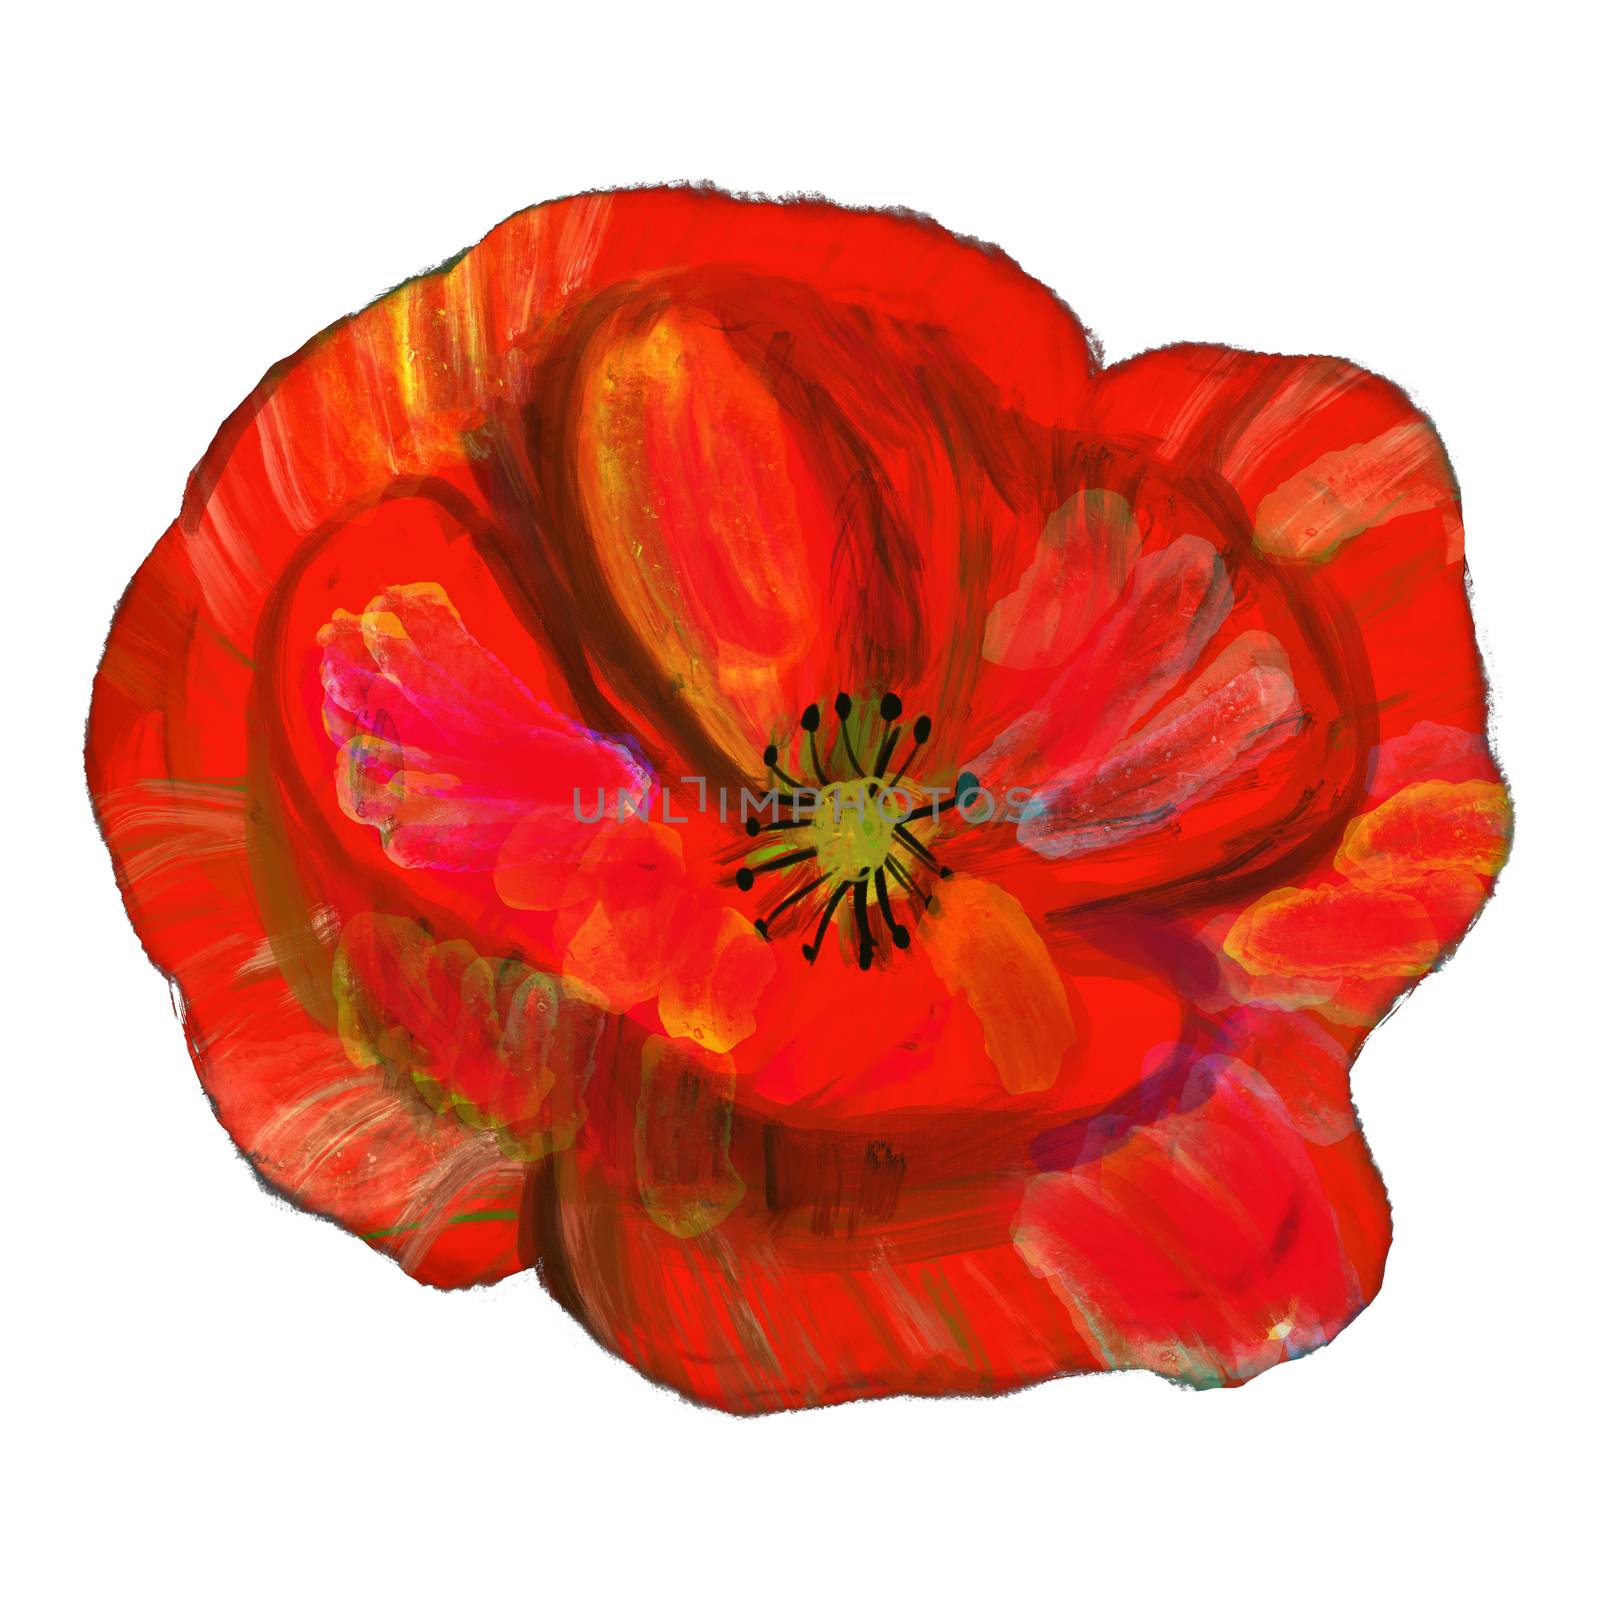 Single Red poppy flower isolated on white background. by Nata_Prando